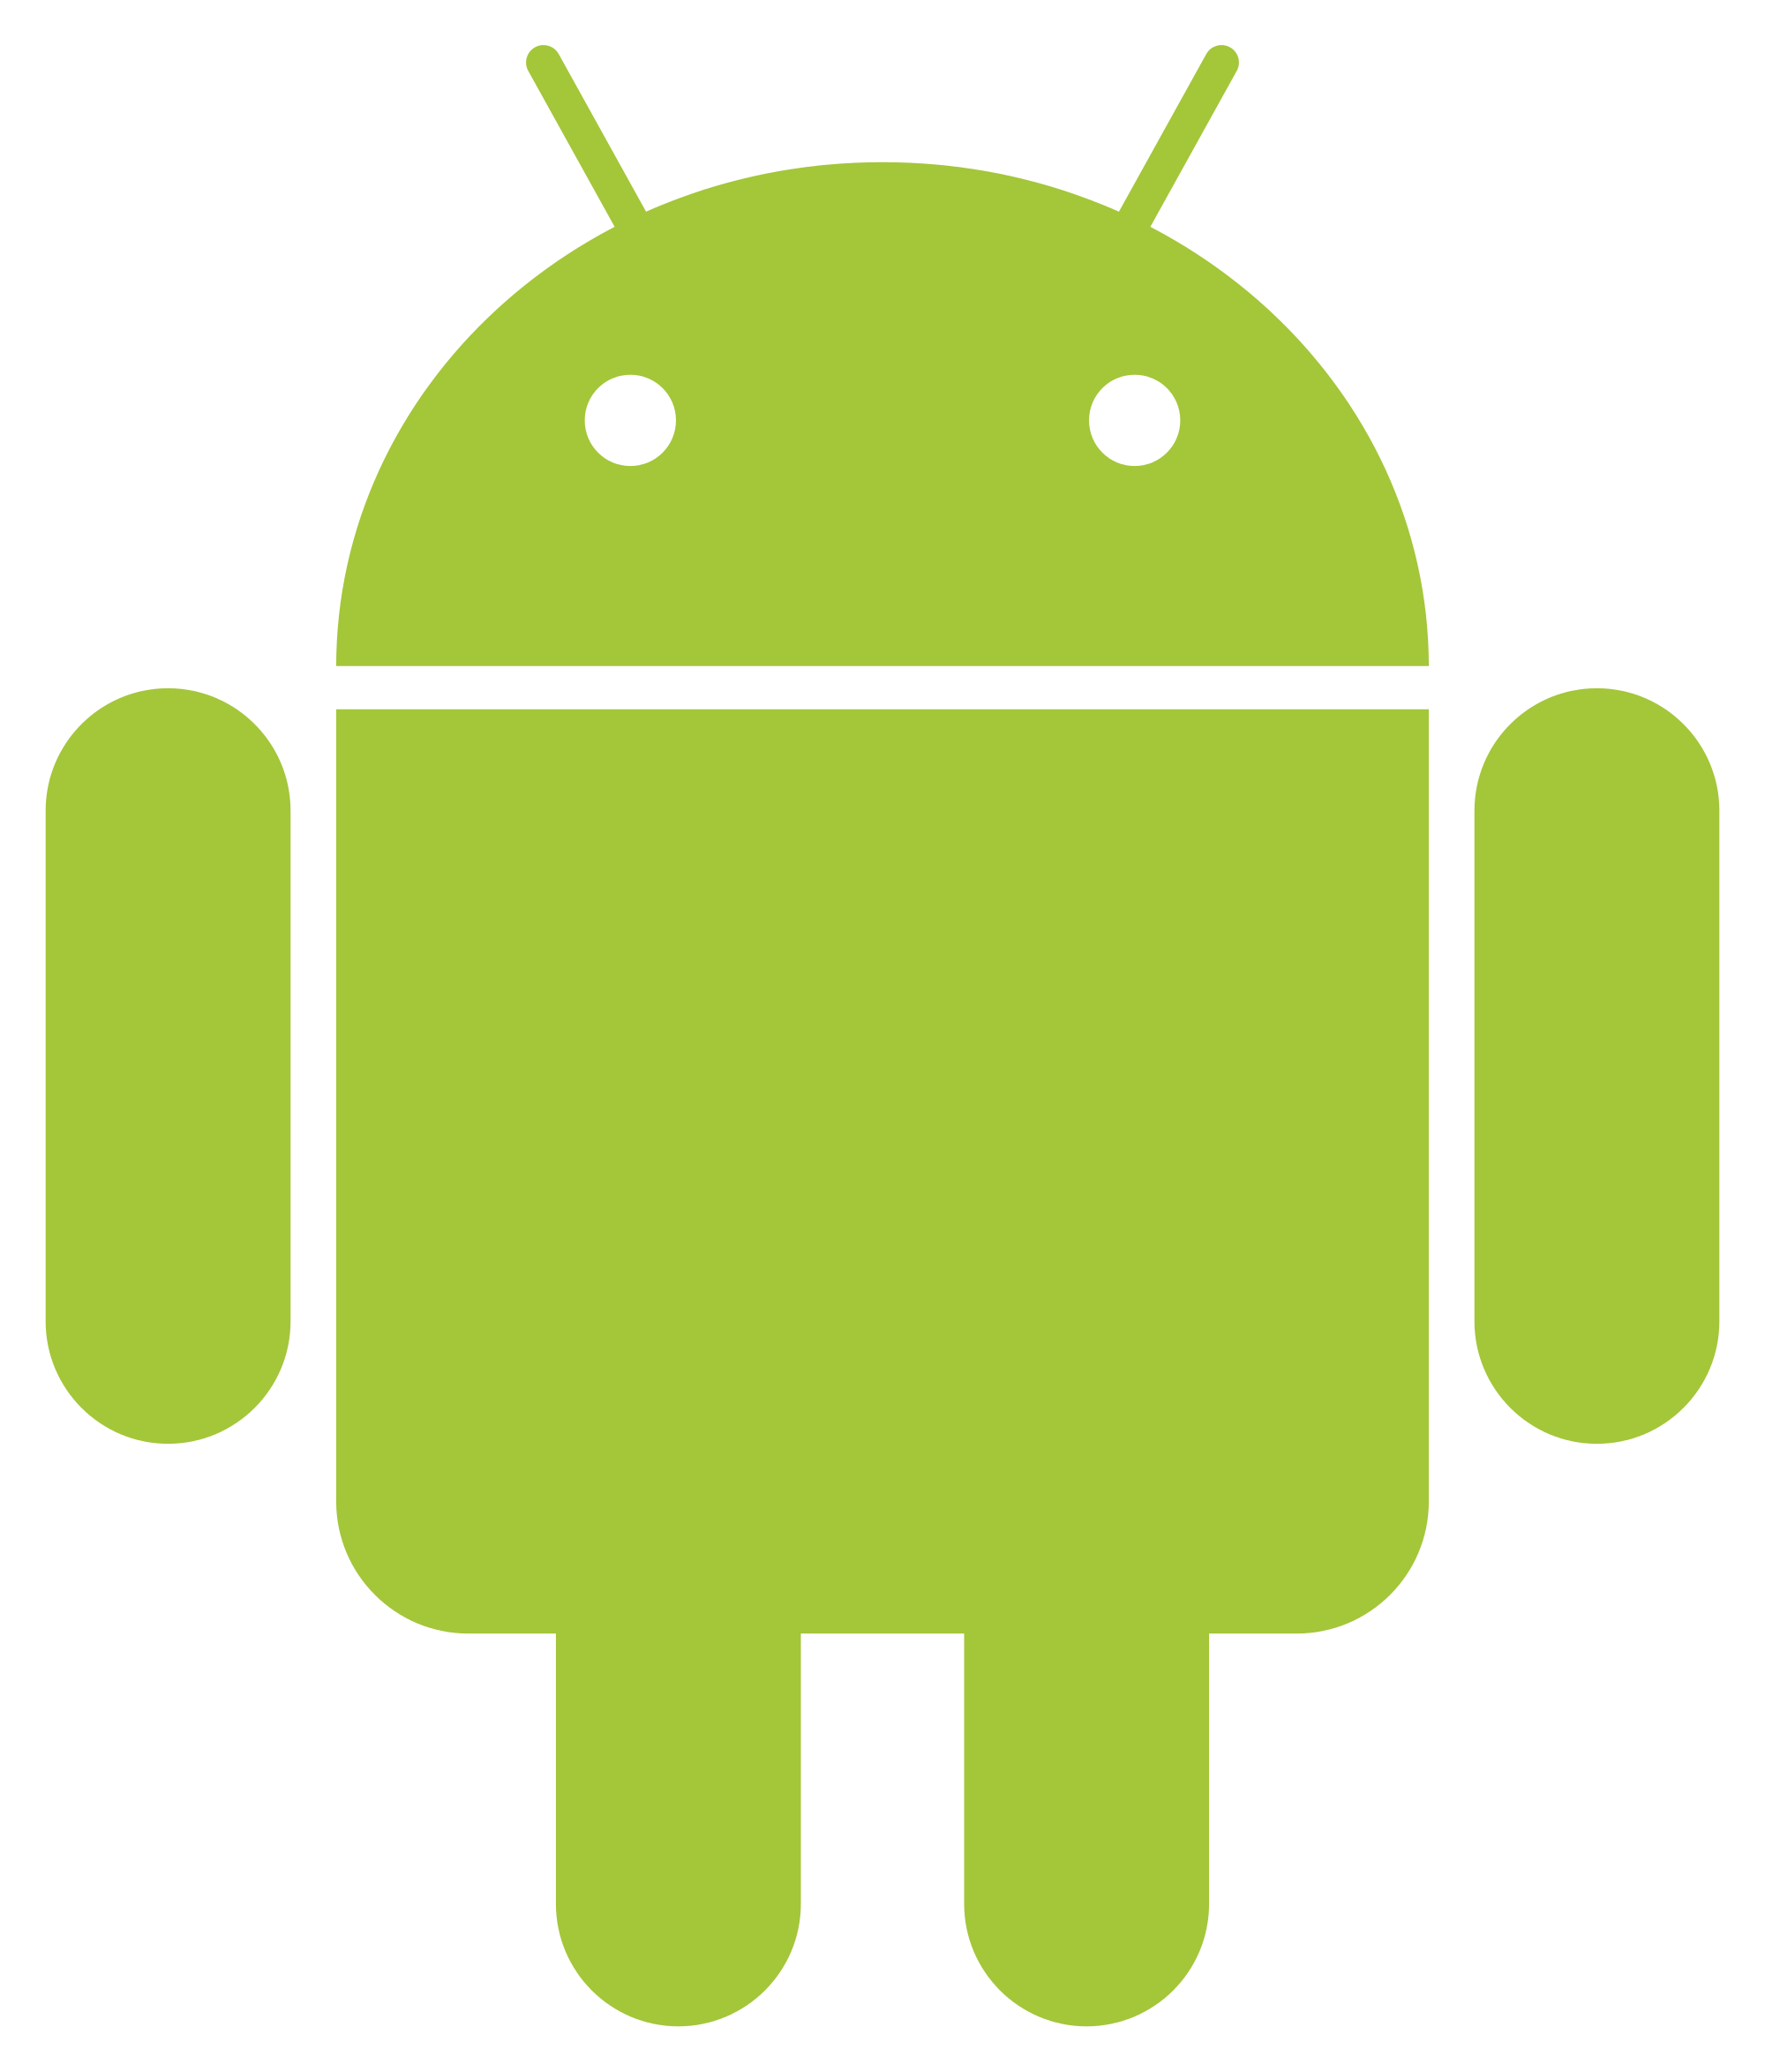 Imagens de android logo png